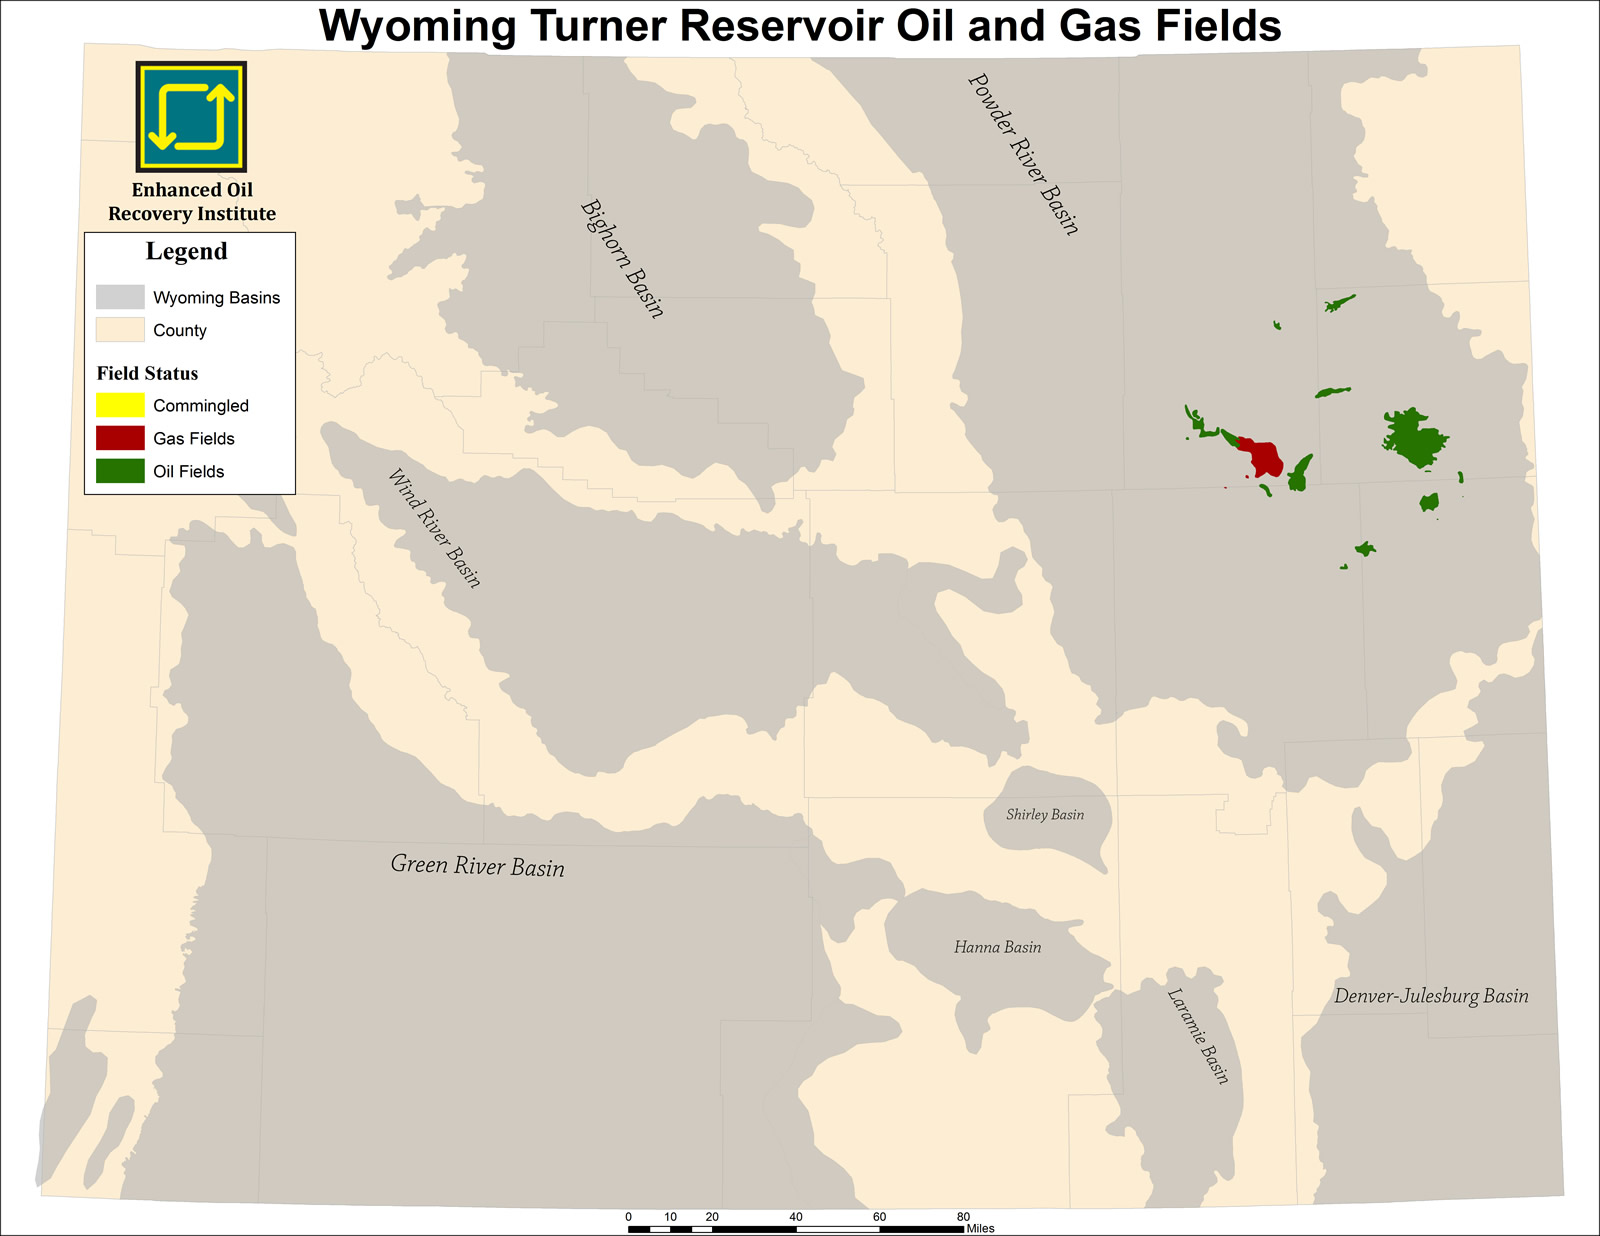 Wyoming Turner Reservoir